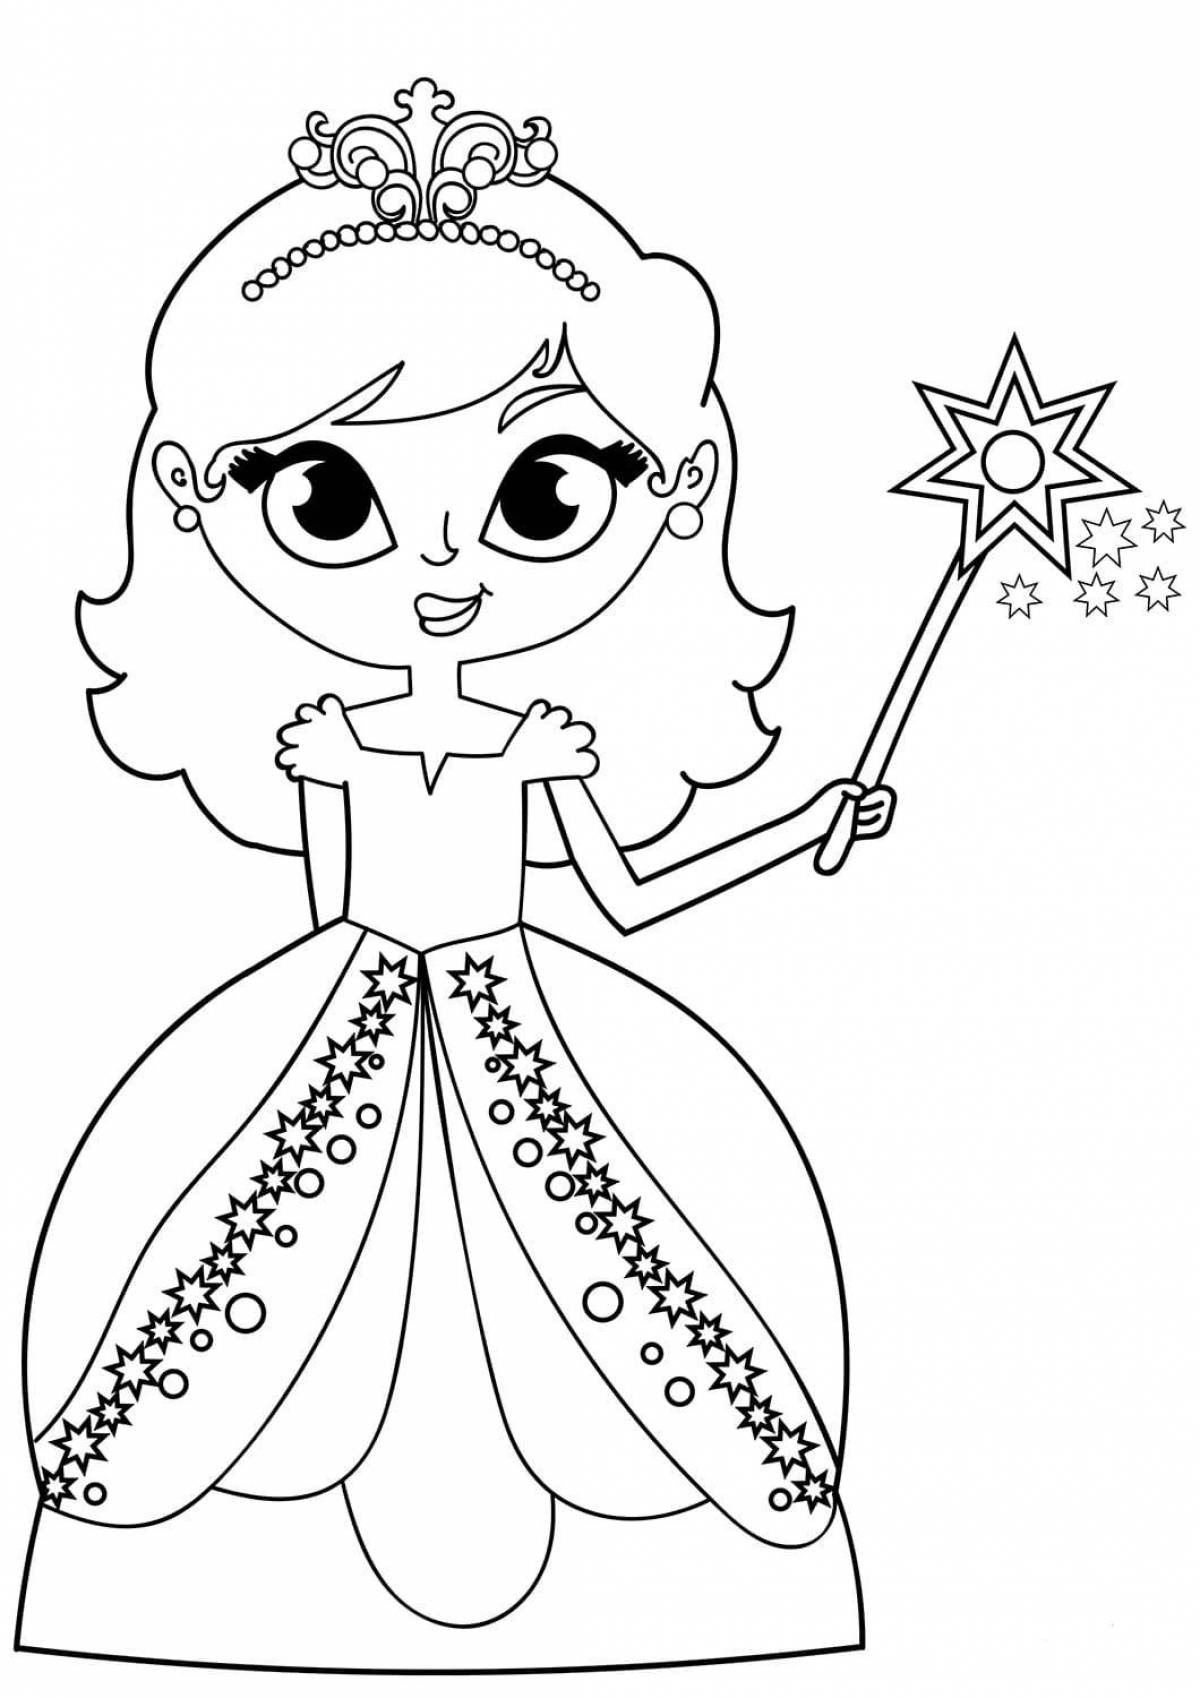 Elegant princess coloring book for kids 5-6 years old